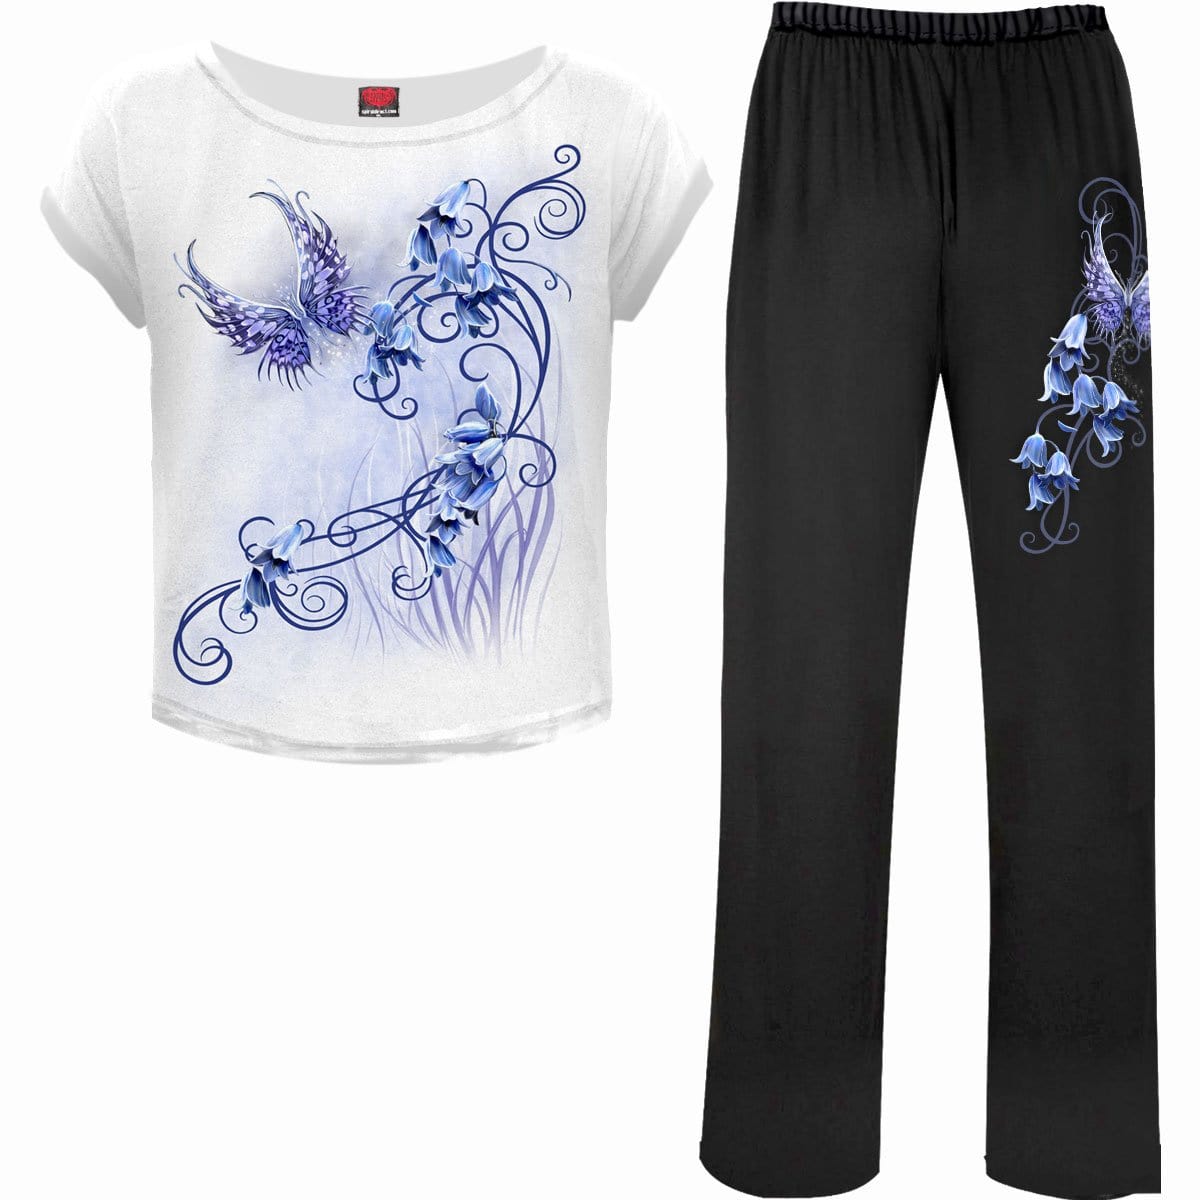 BLUEBELL FAIRY - 4pc Gothic Pyjama Set